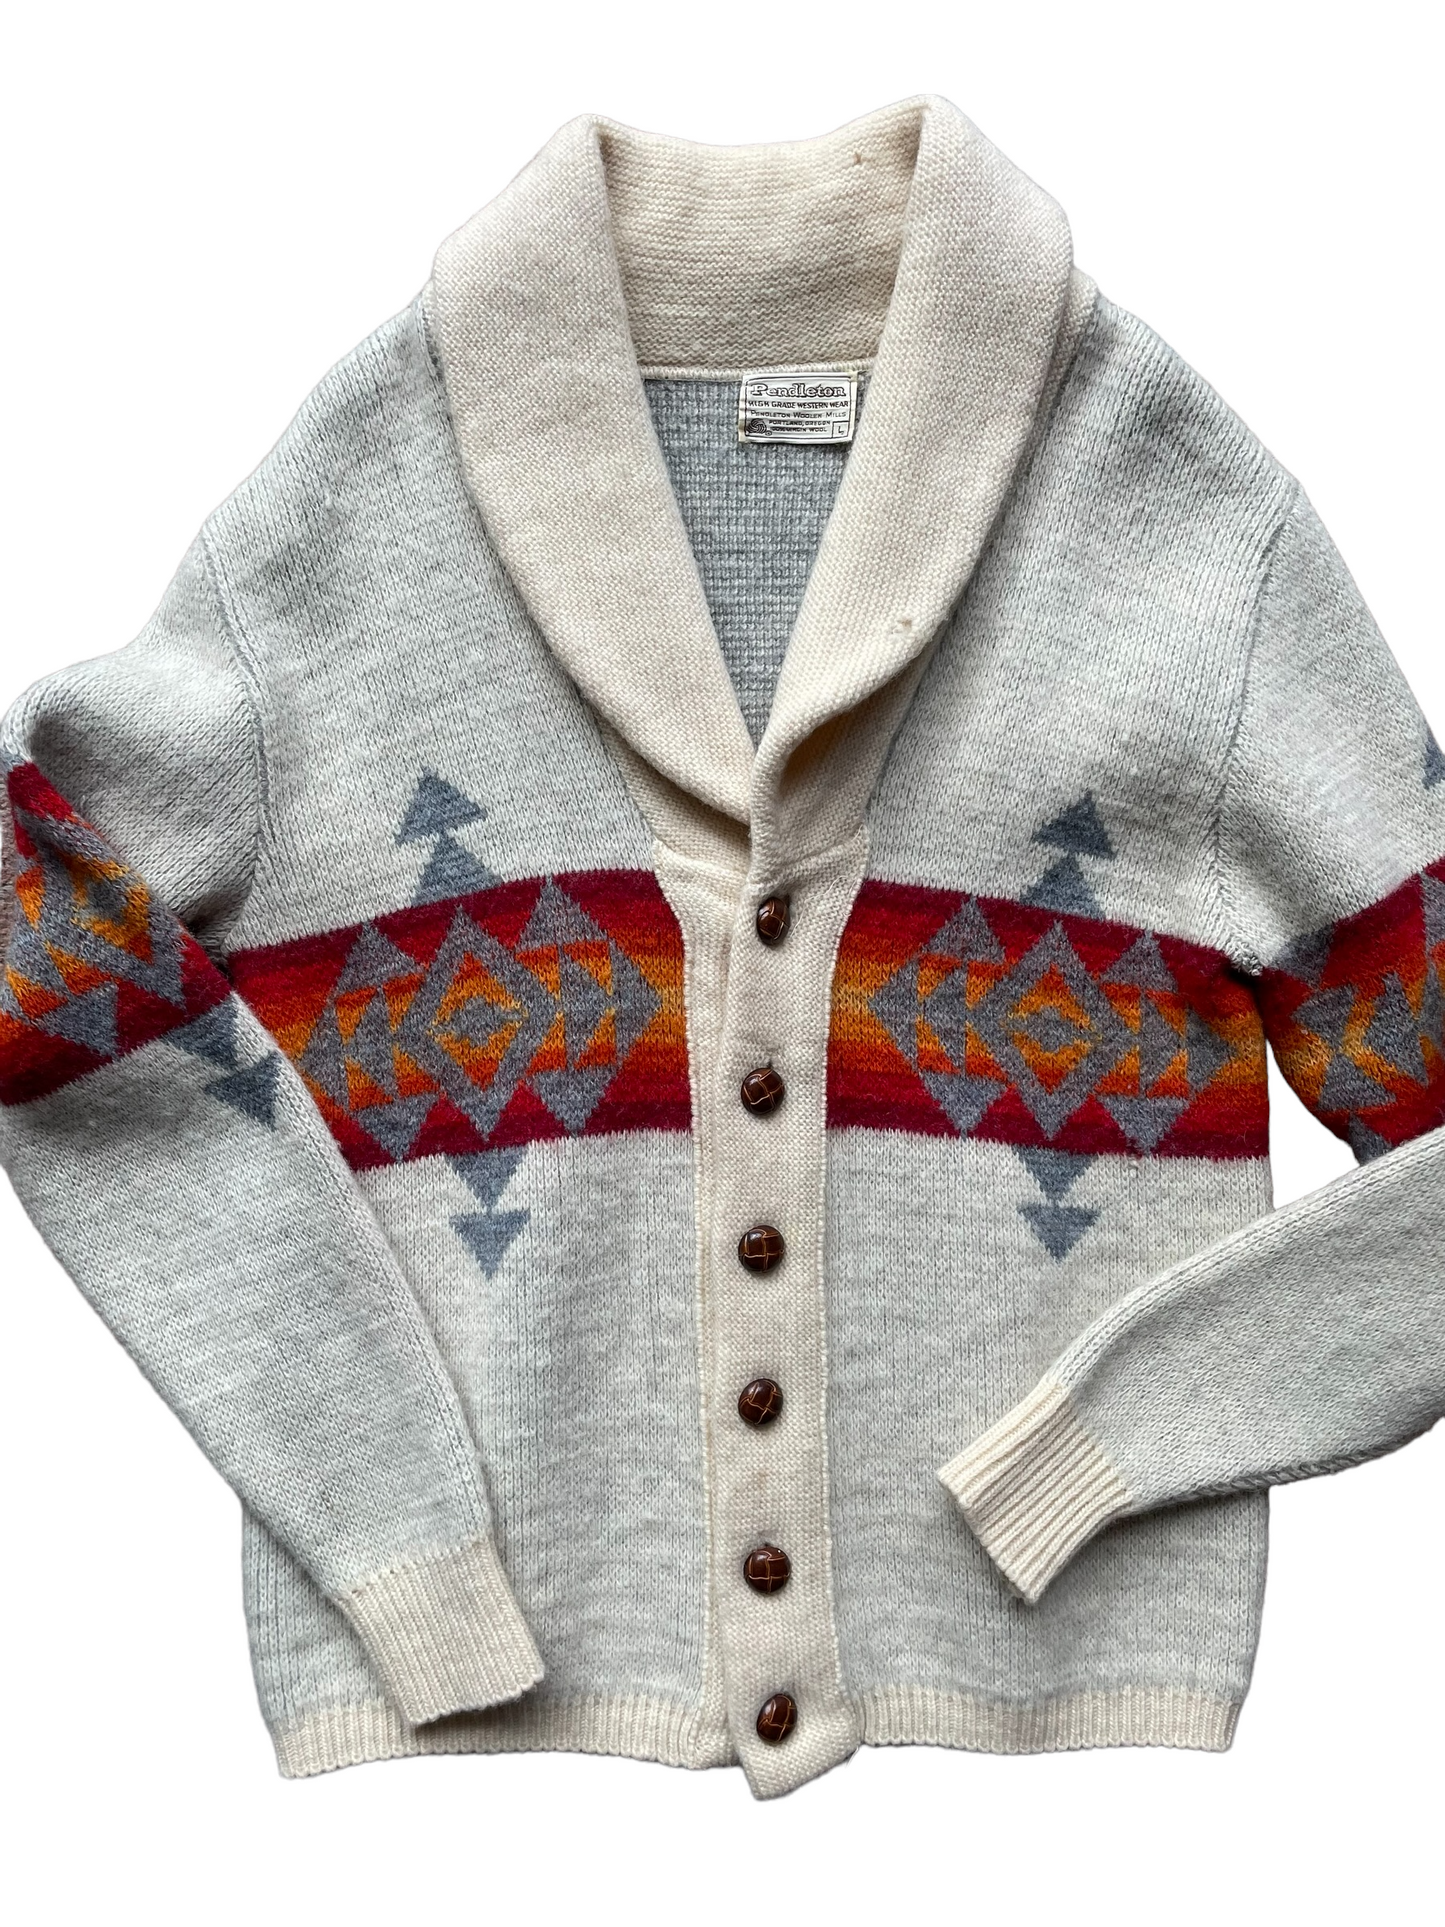 Vintage Pendleton Western Wear Cardigan Sweater | Barn Owl Vintage | Seattle Vintage Sweaters Front full view.